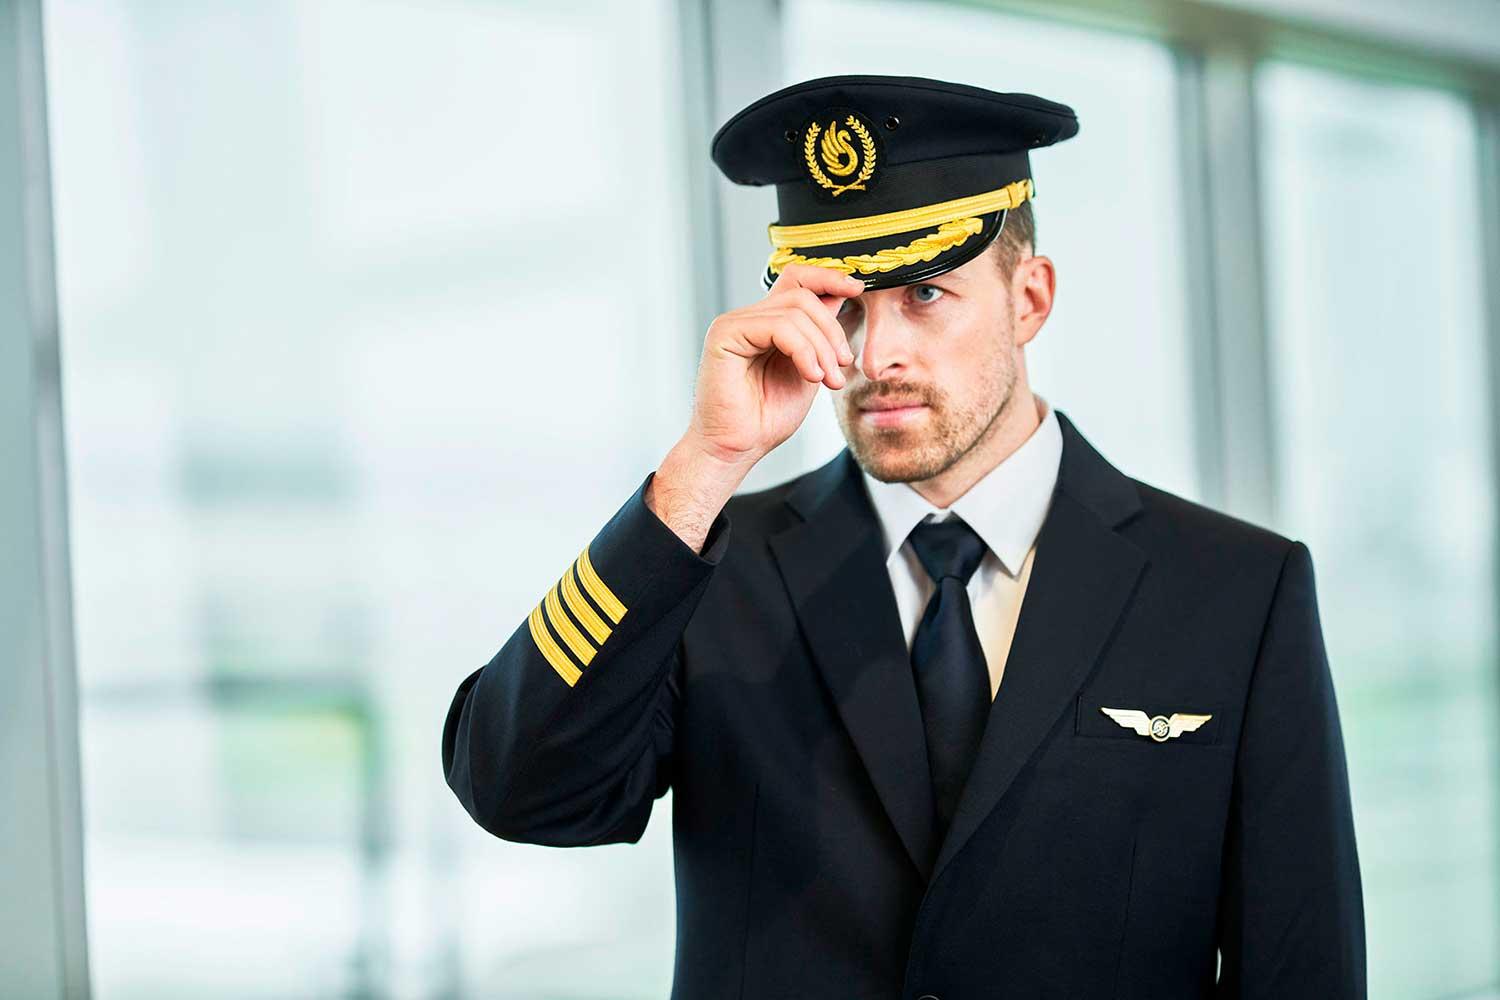 Airline uniform caps